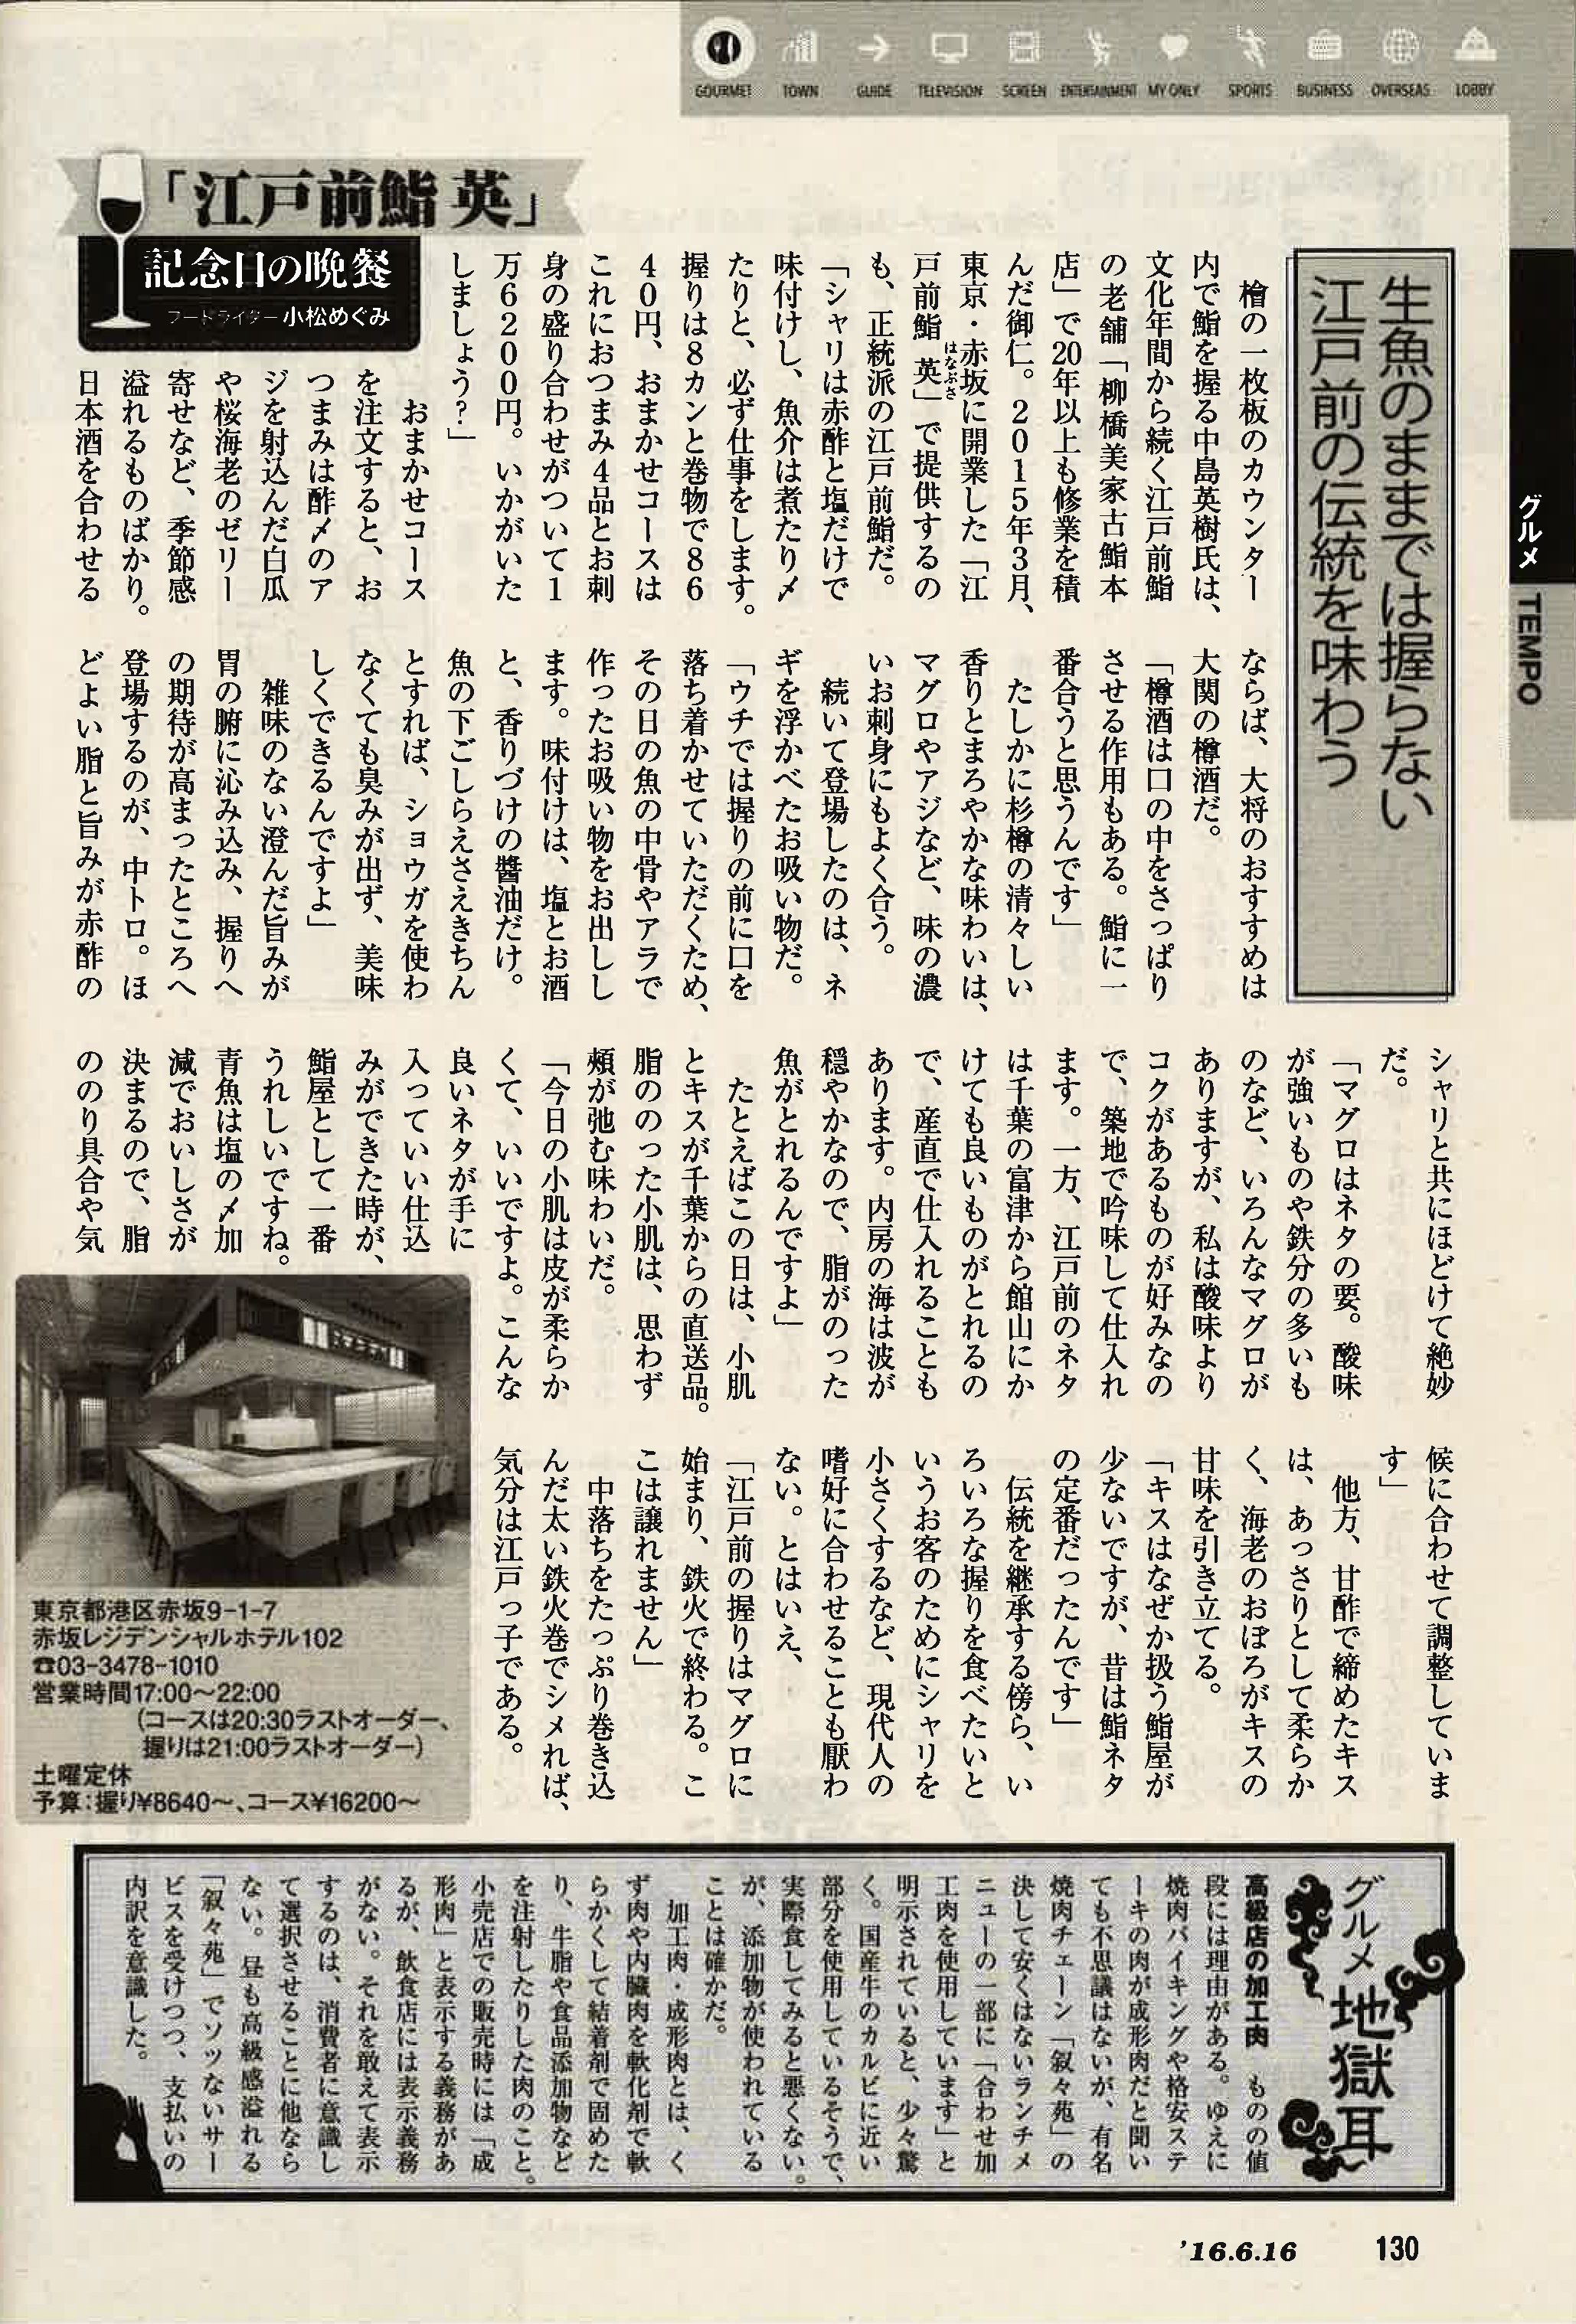  Shukan Shincho June 16, 2016 issue 